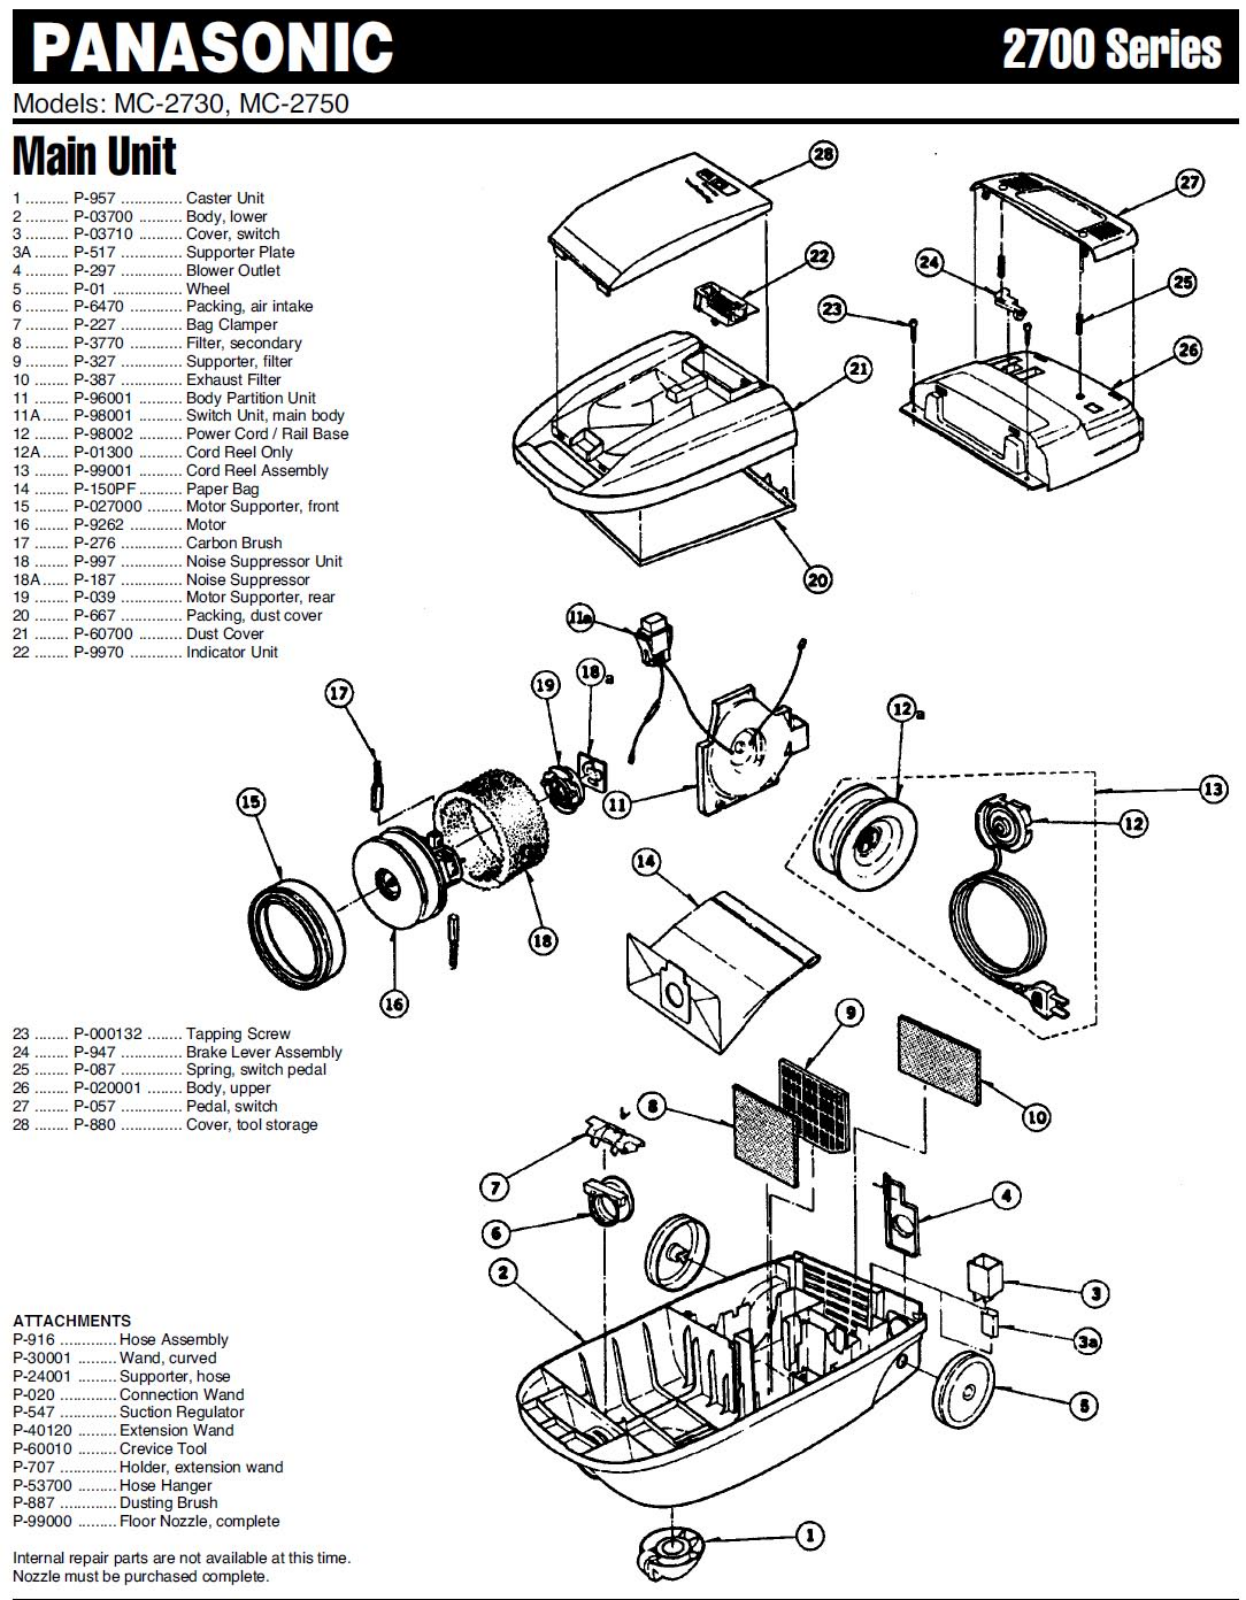 Panasonic 2750 Parts List